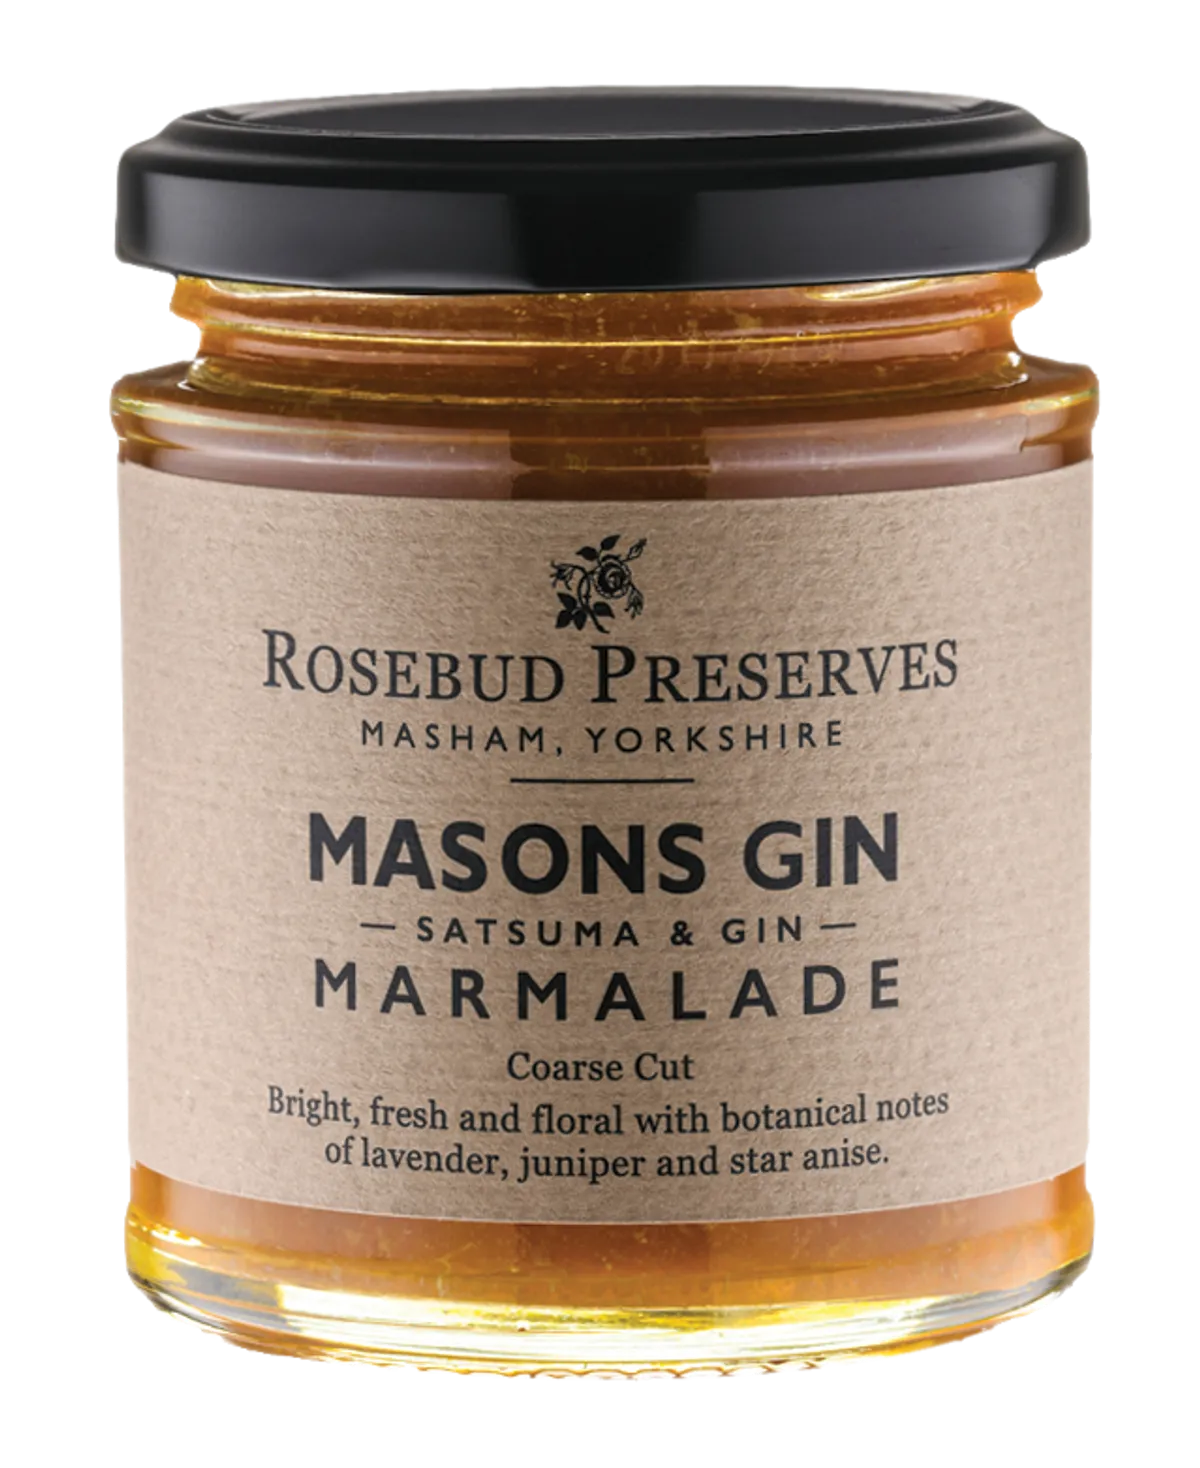 Masons Gin Marmalade | 227g